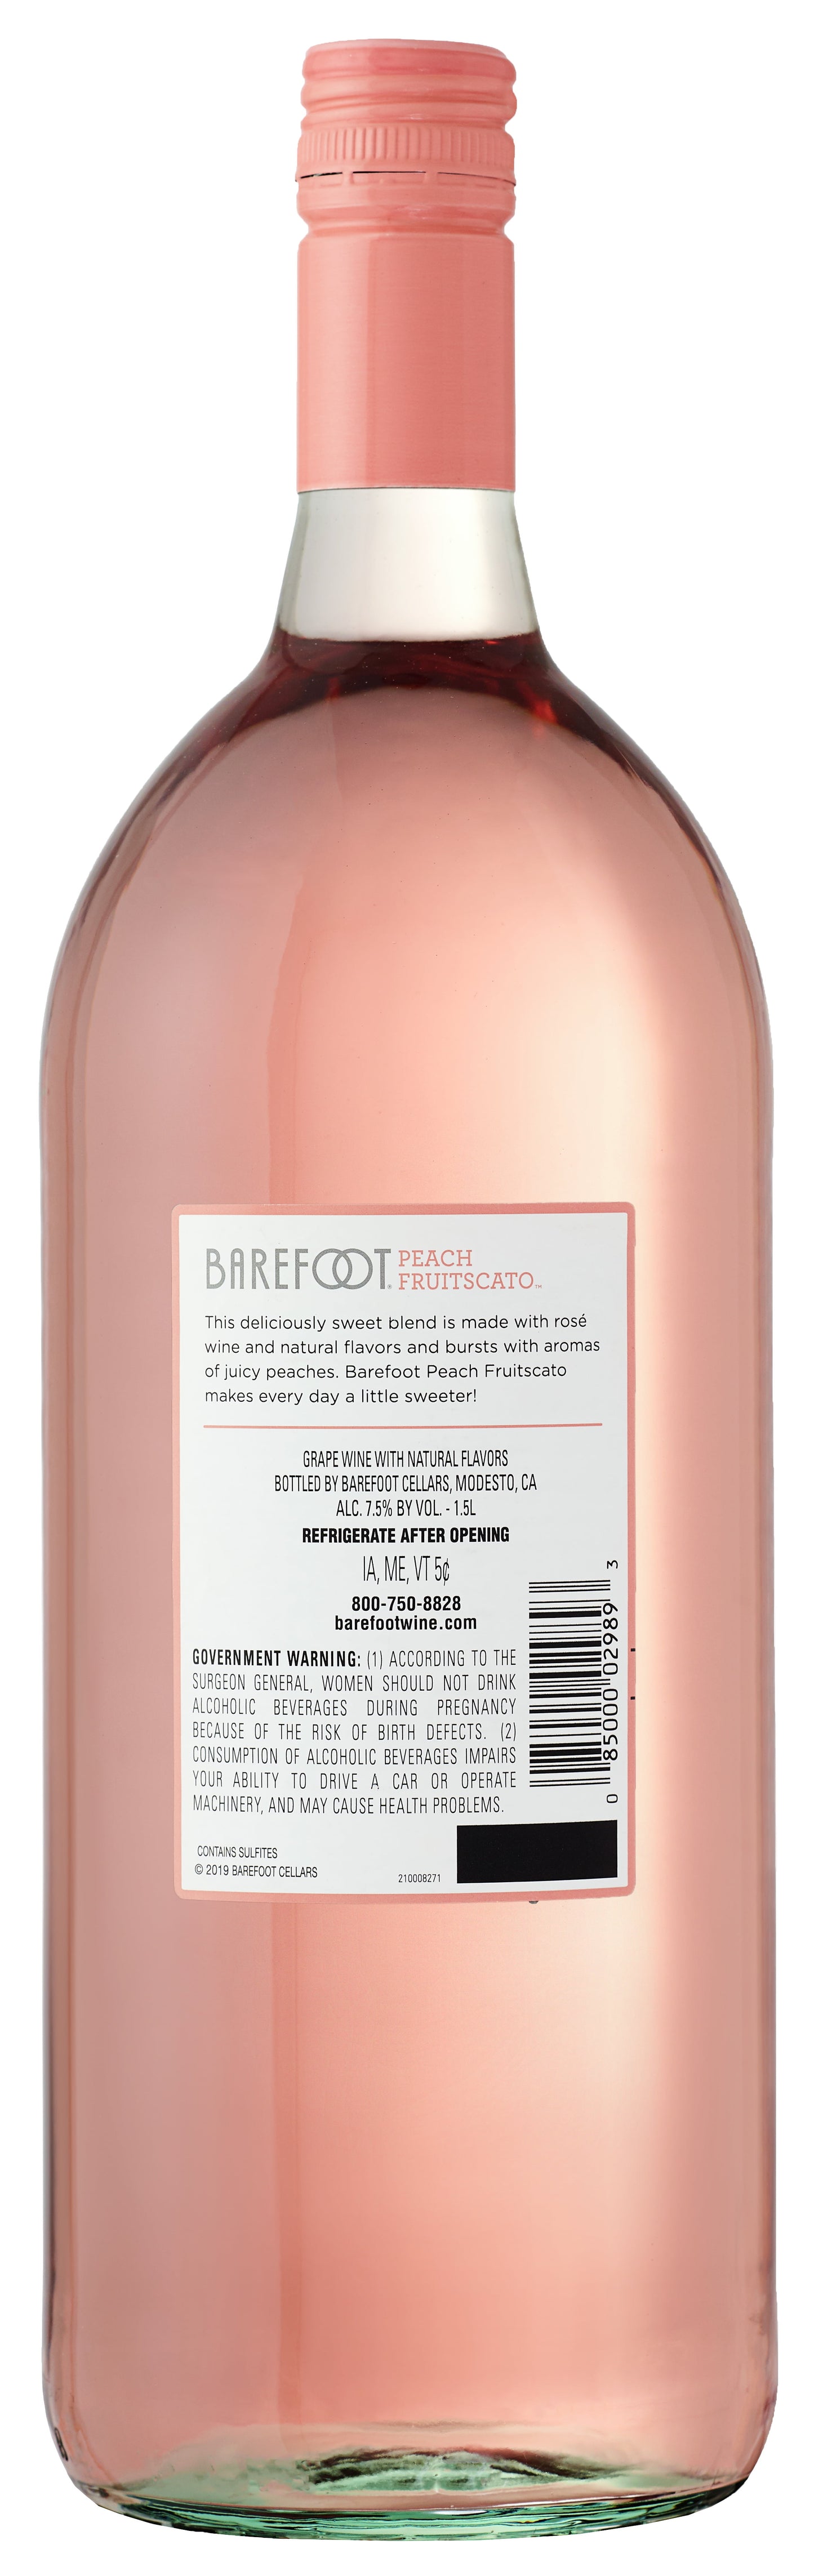 Barefoot Peach Fruitscato Wine, California, 1.5 Liter Glass Bottle